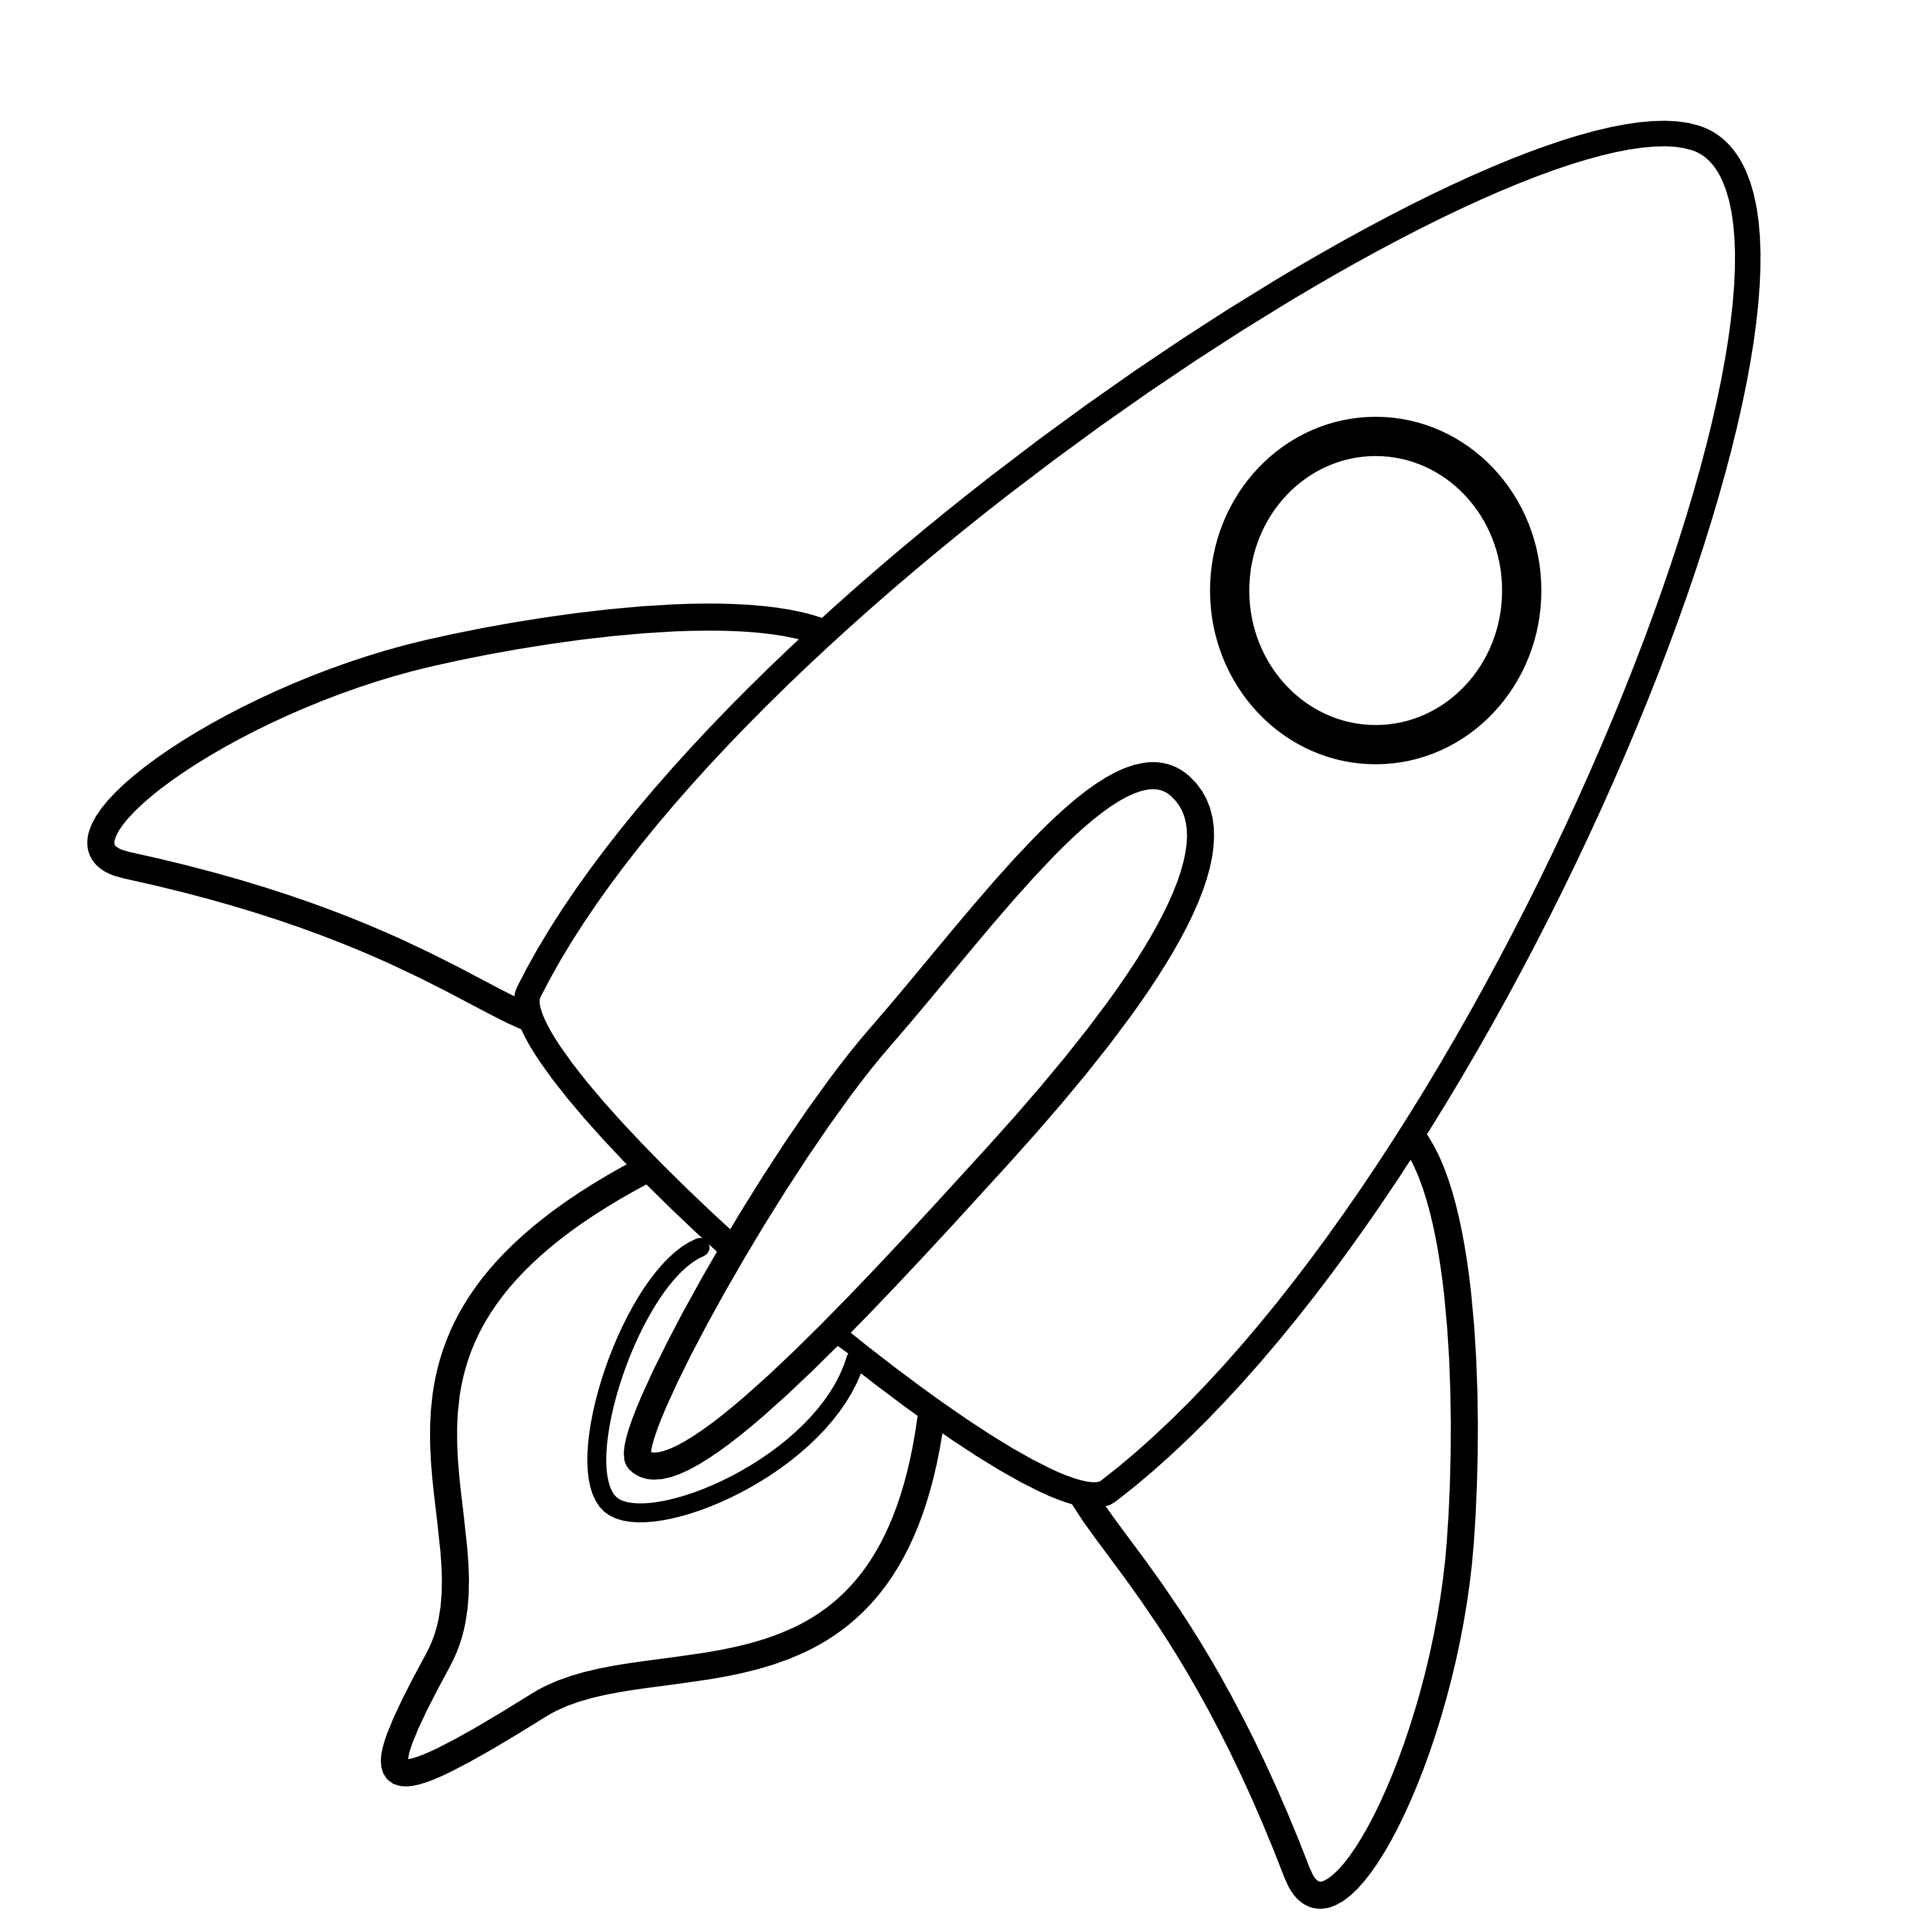 Space rocket clip art black and white pics about space - Clipartix